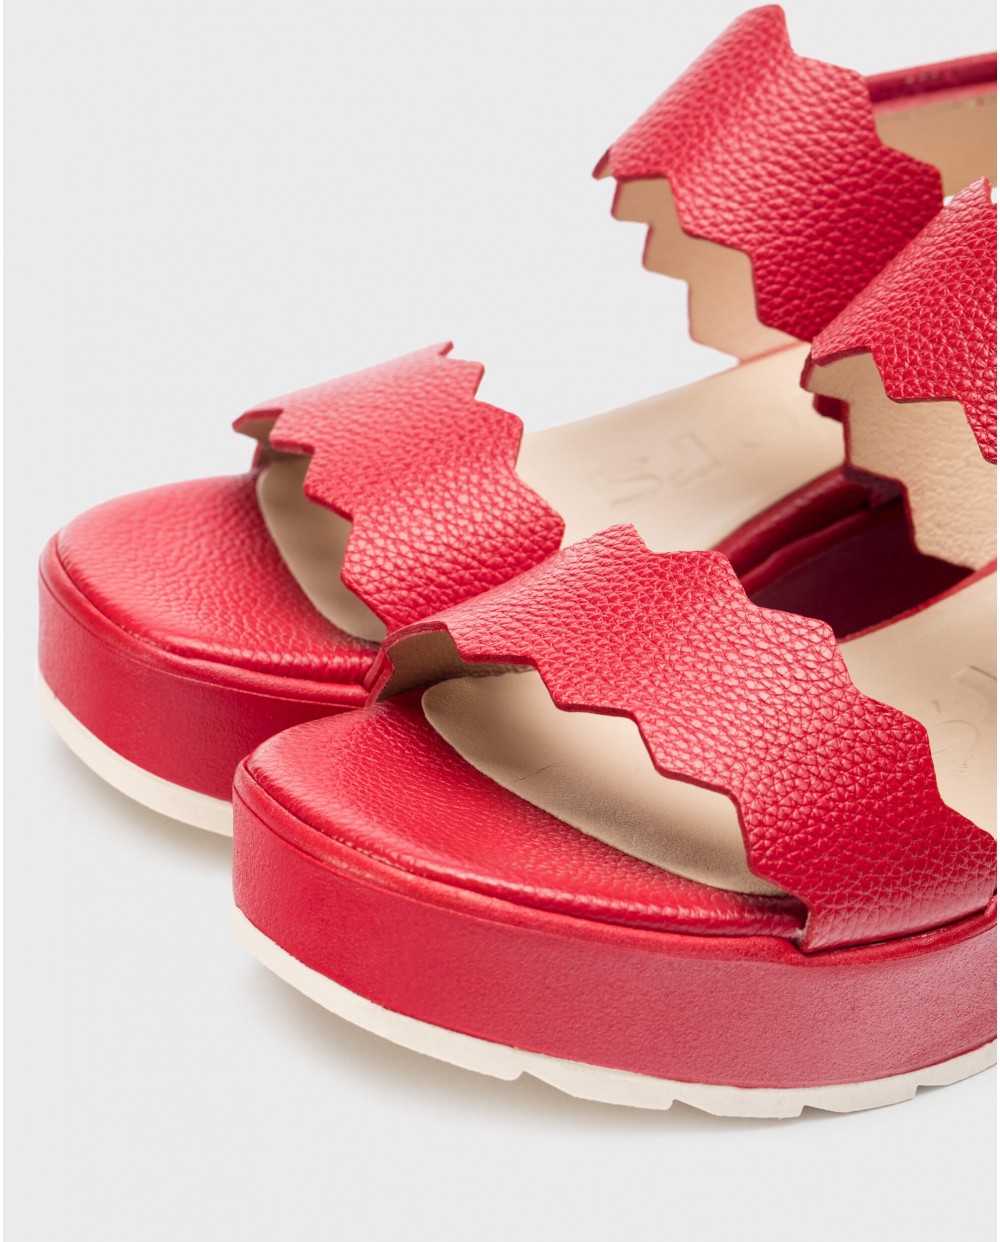 Wonders-Sandals-Red Púrpura sandals